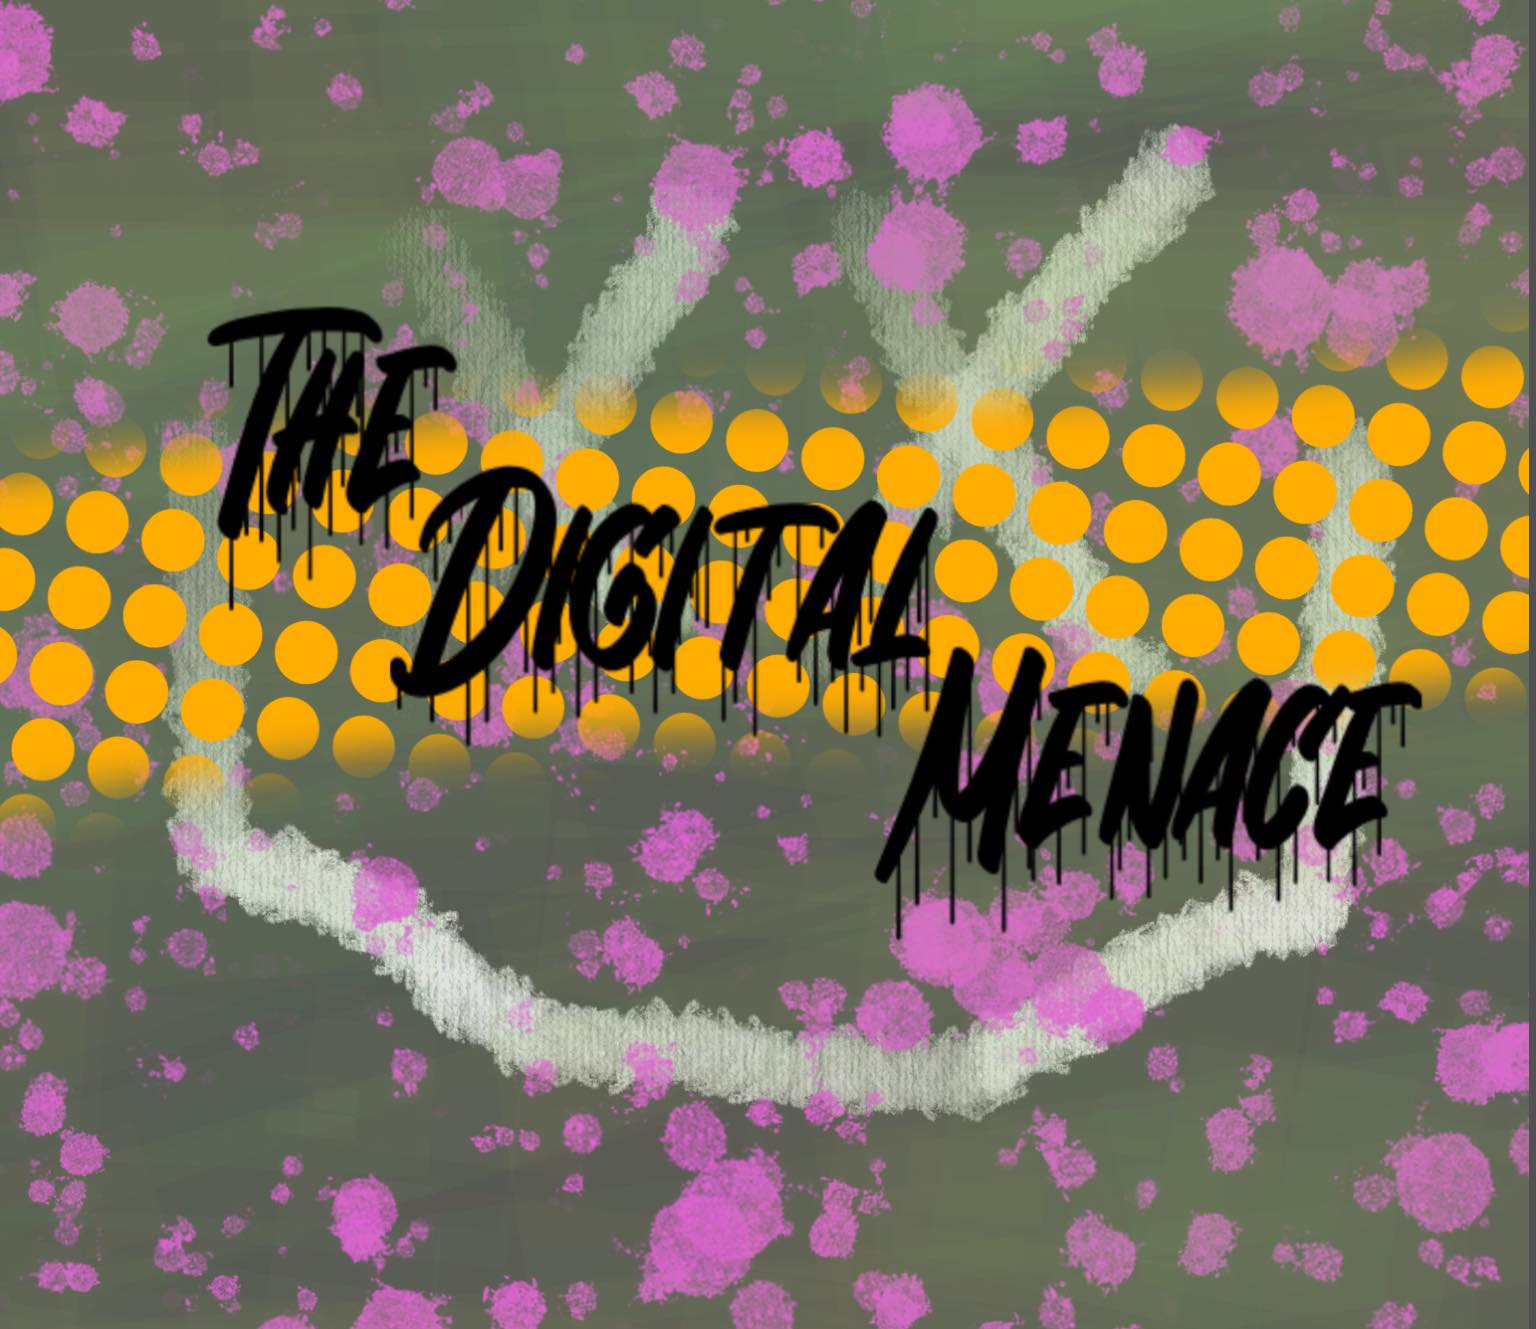 TheDigitalMenace